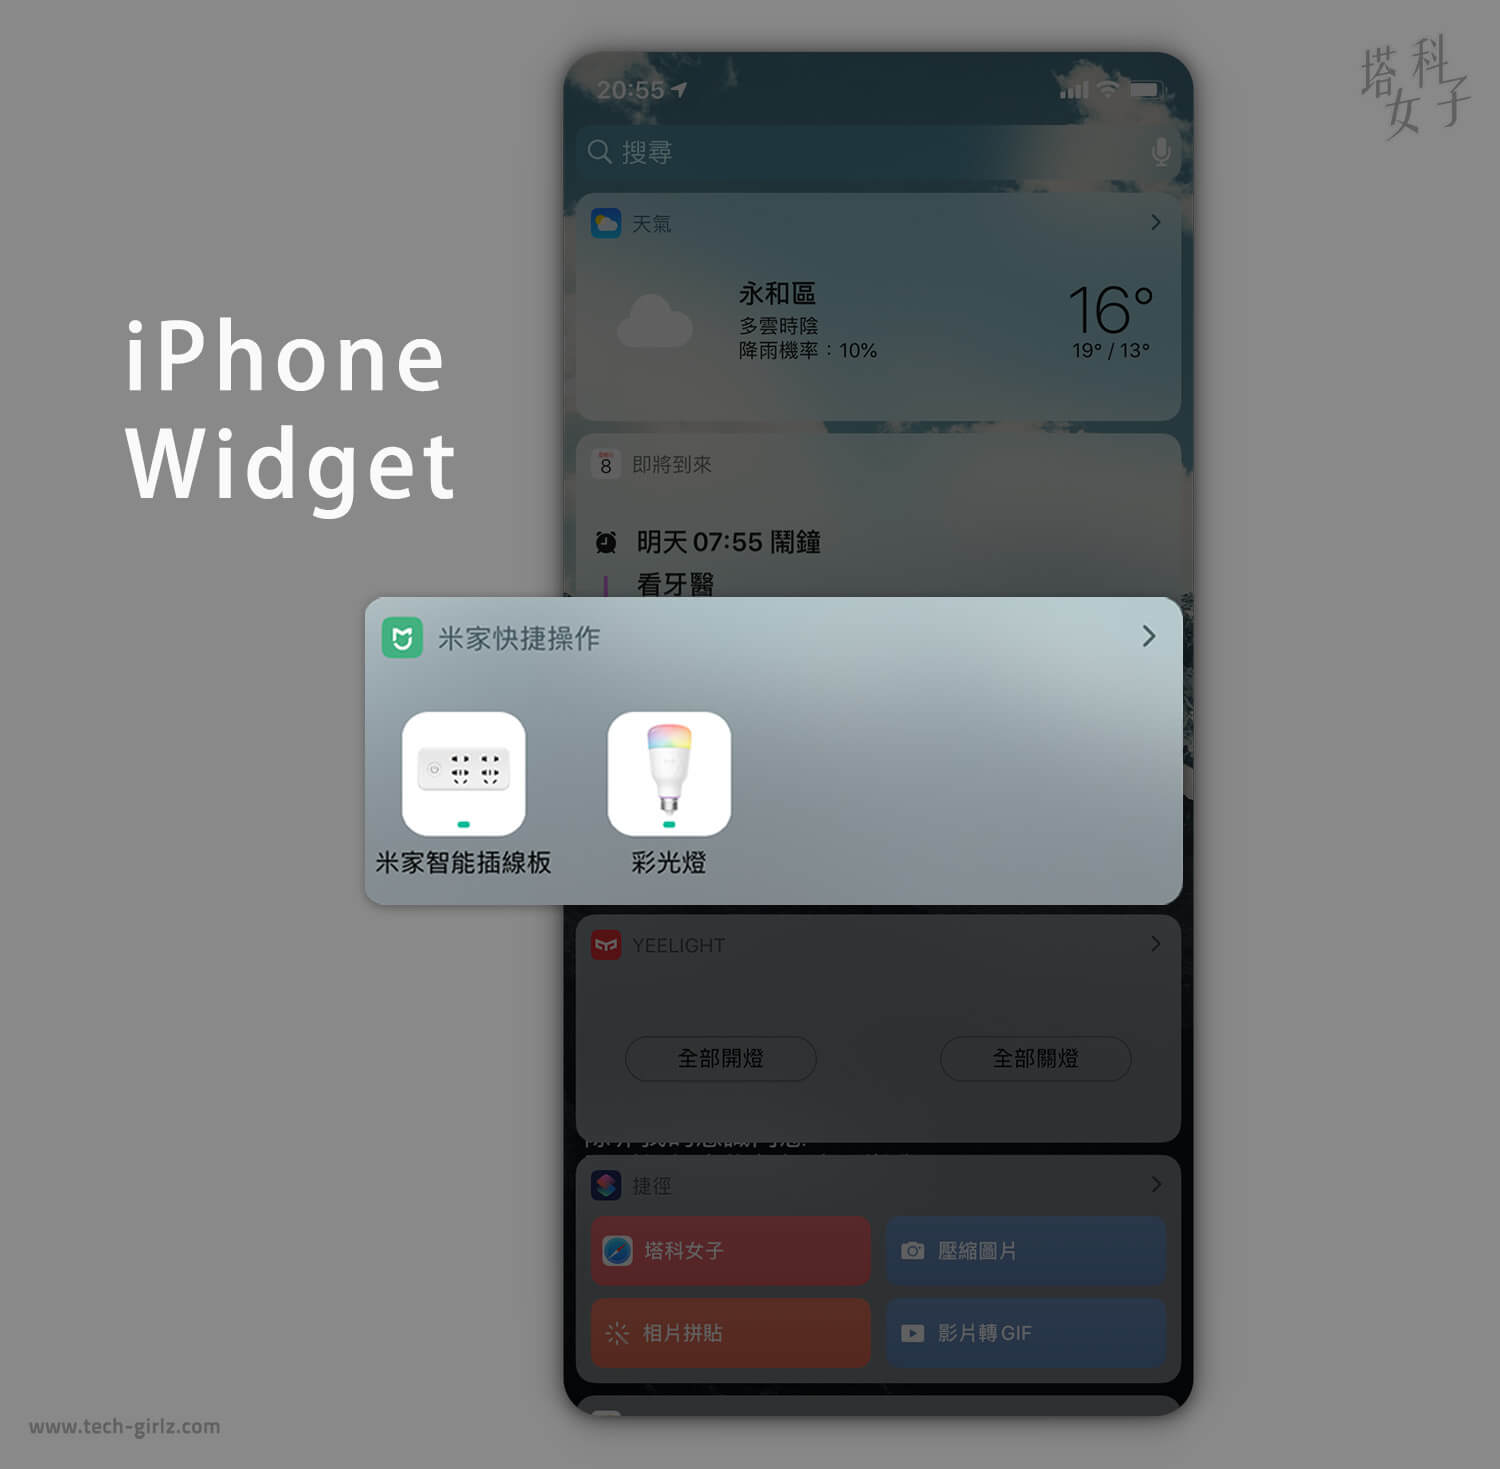 Yeelight LED 智慧燈泡彩光版 - 米家 APP iPhone Widget